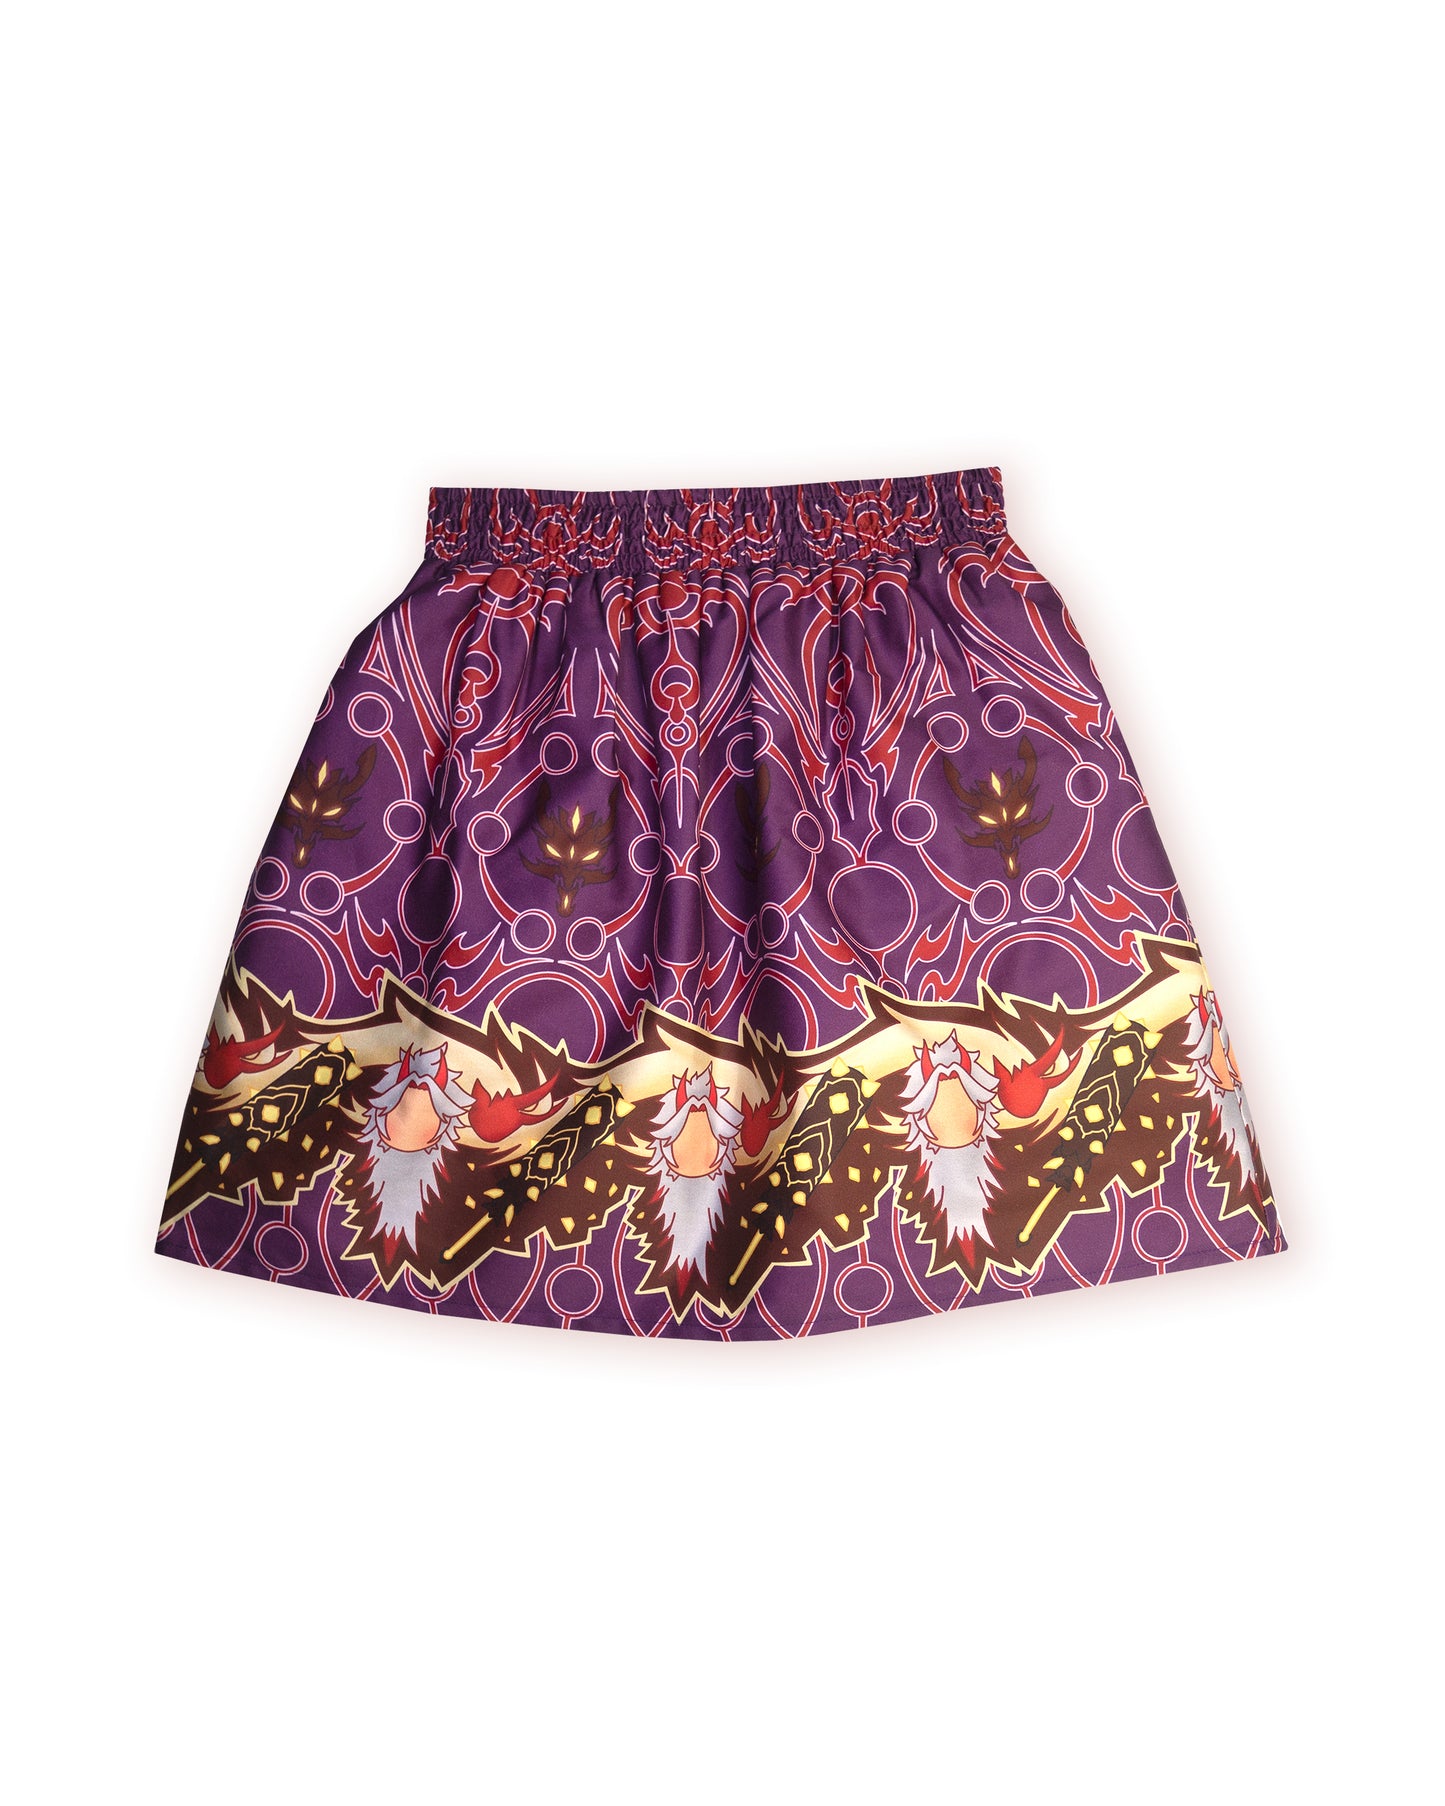 Made to order: Arataki Itto Skirt